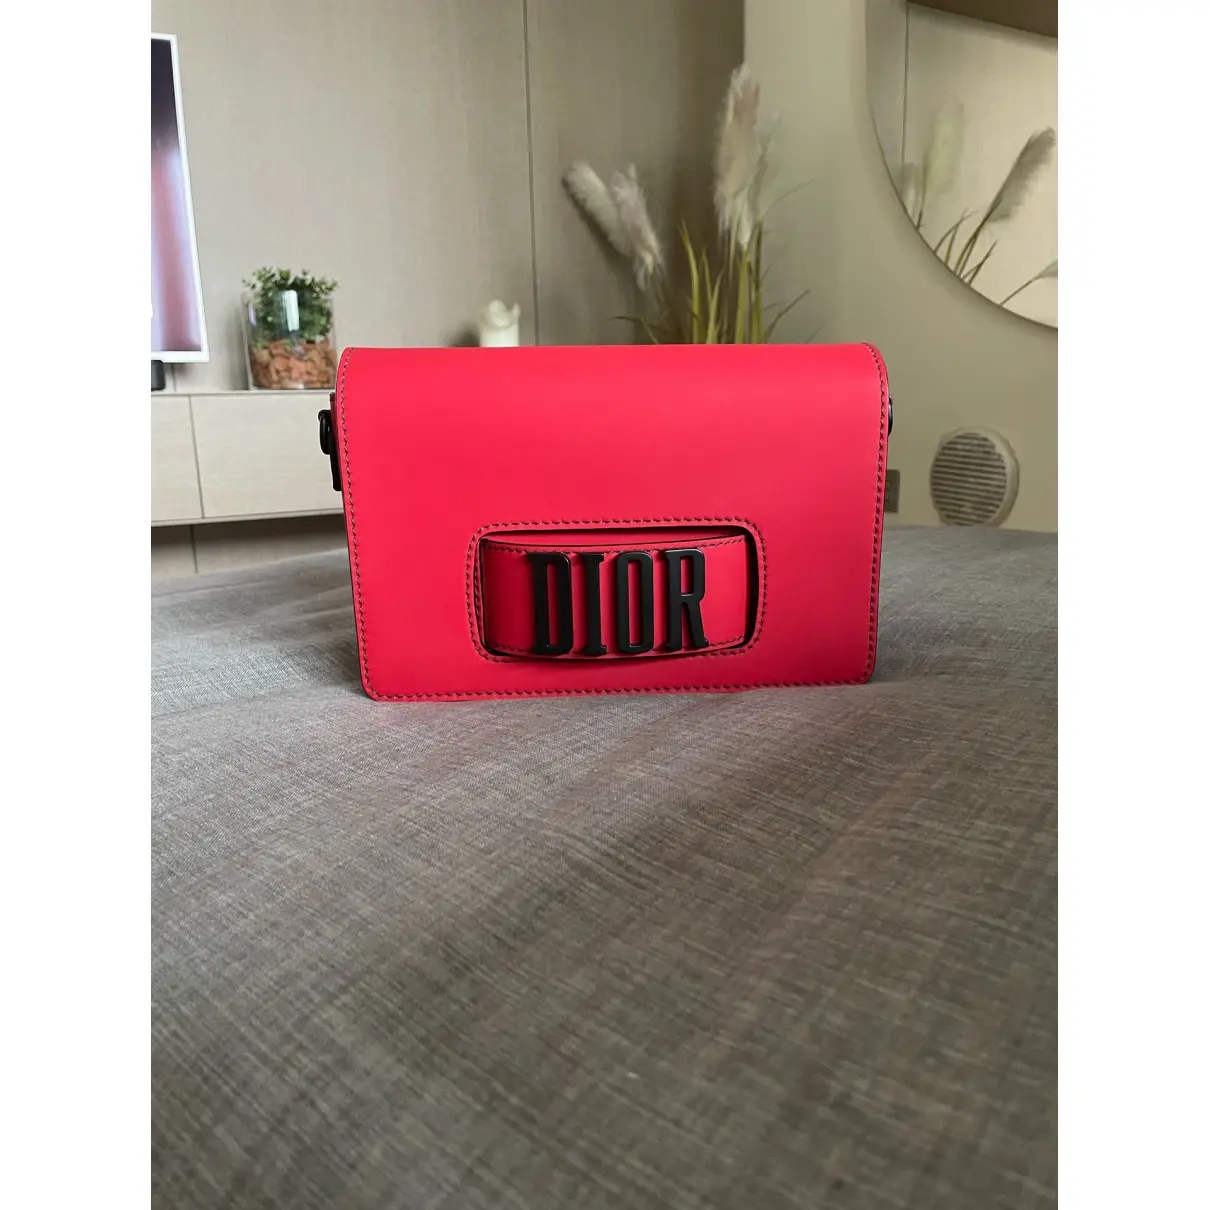 Buy Dior Dio(r)evolution leather handbag online